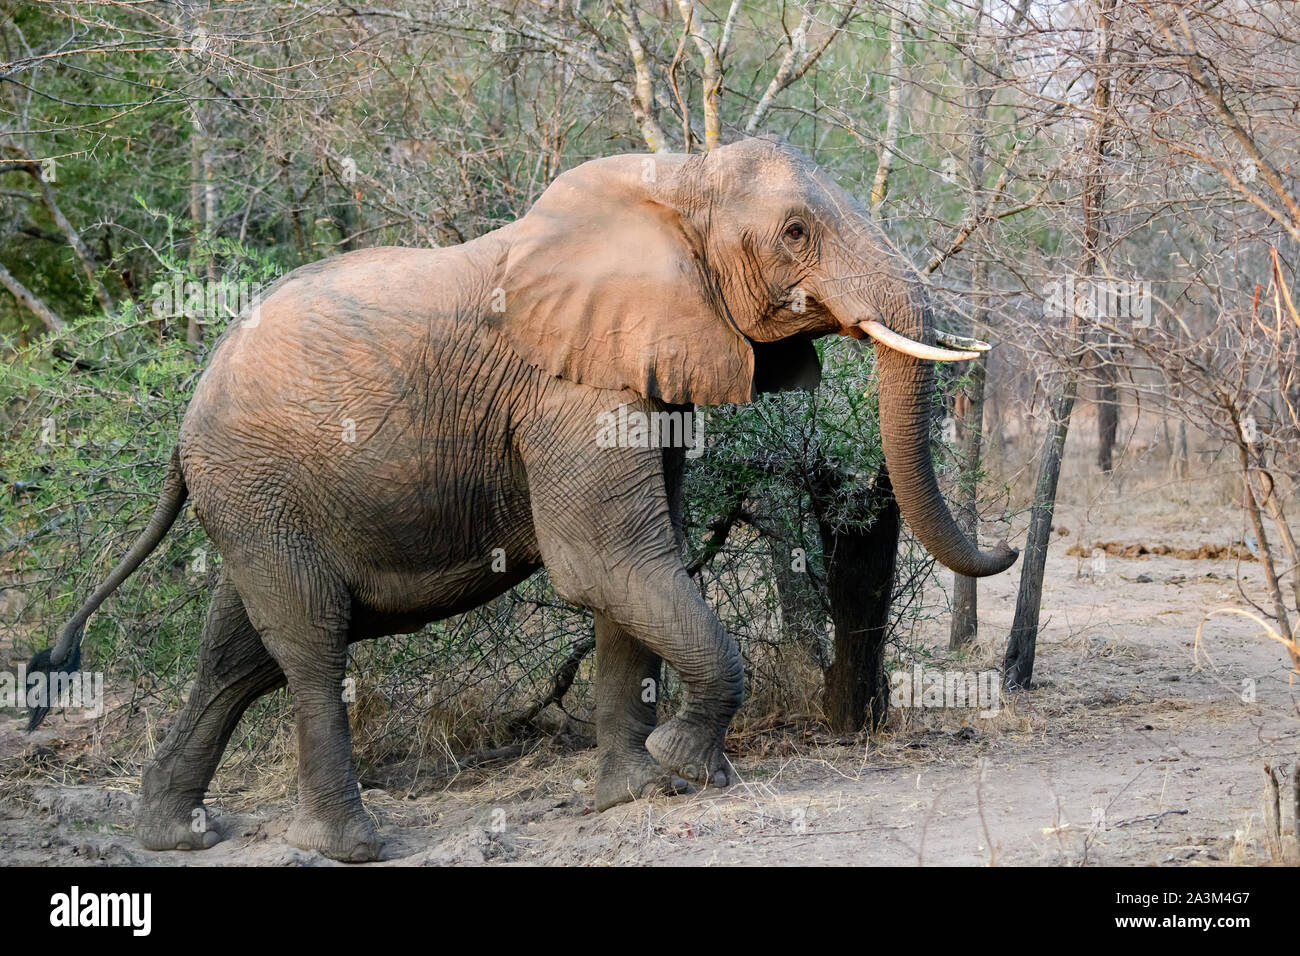 african elephant in close proximity walking past the safari vehicle Stock Photo